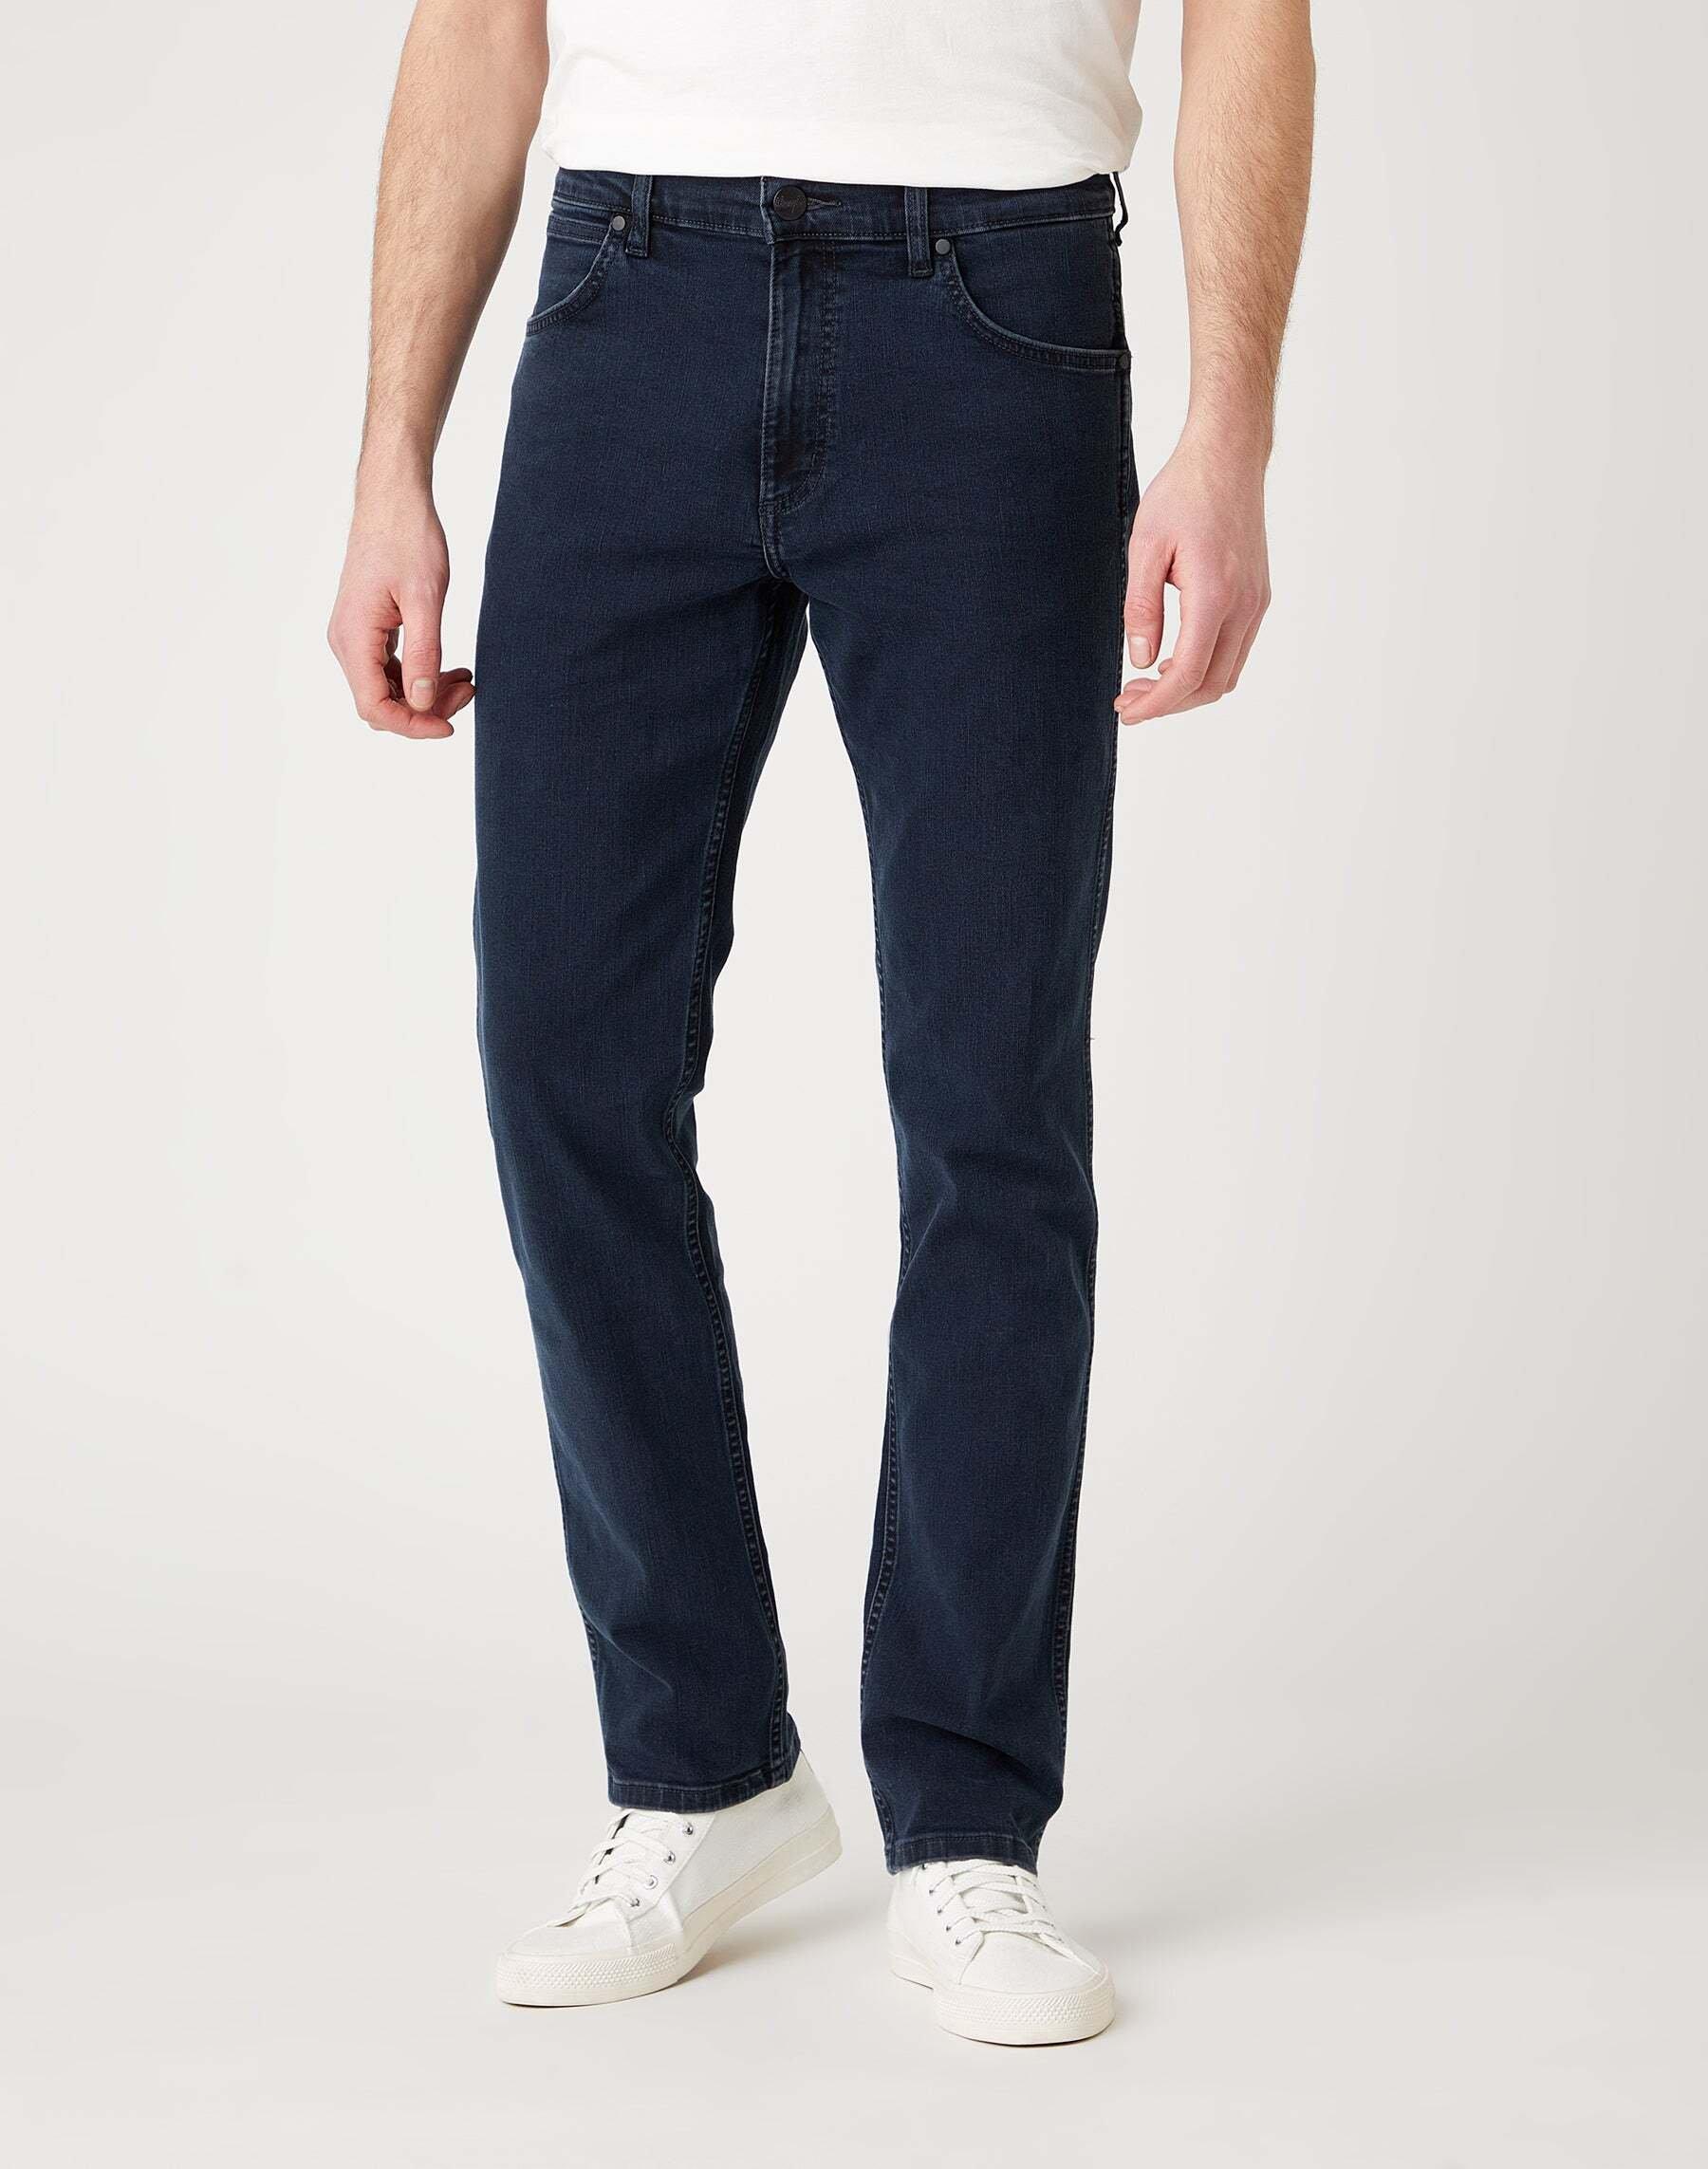 Jeans Straight Leg Greensboro Herren Blau Denim L32/W42 von Wrangler